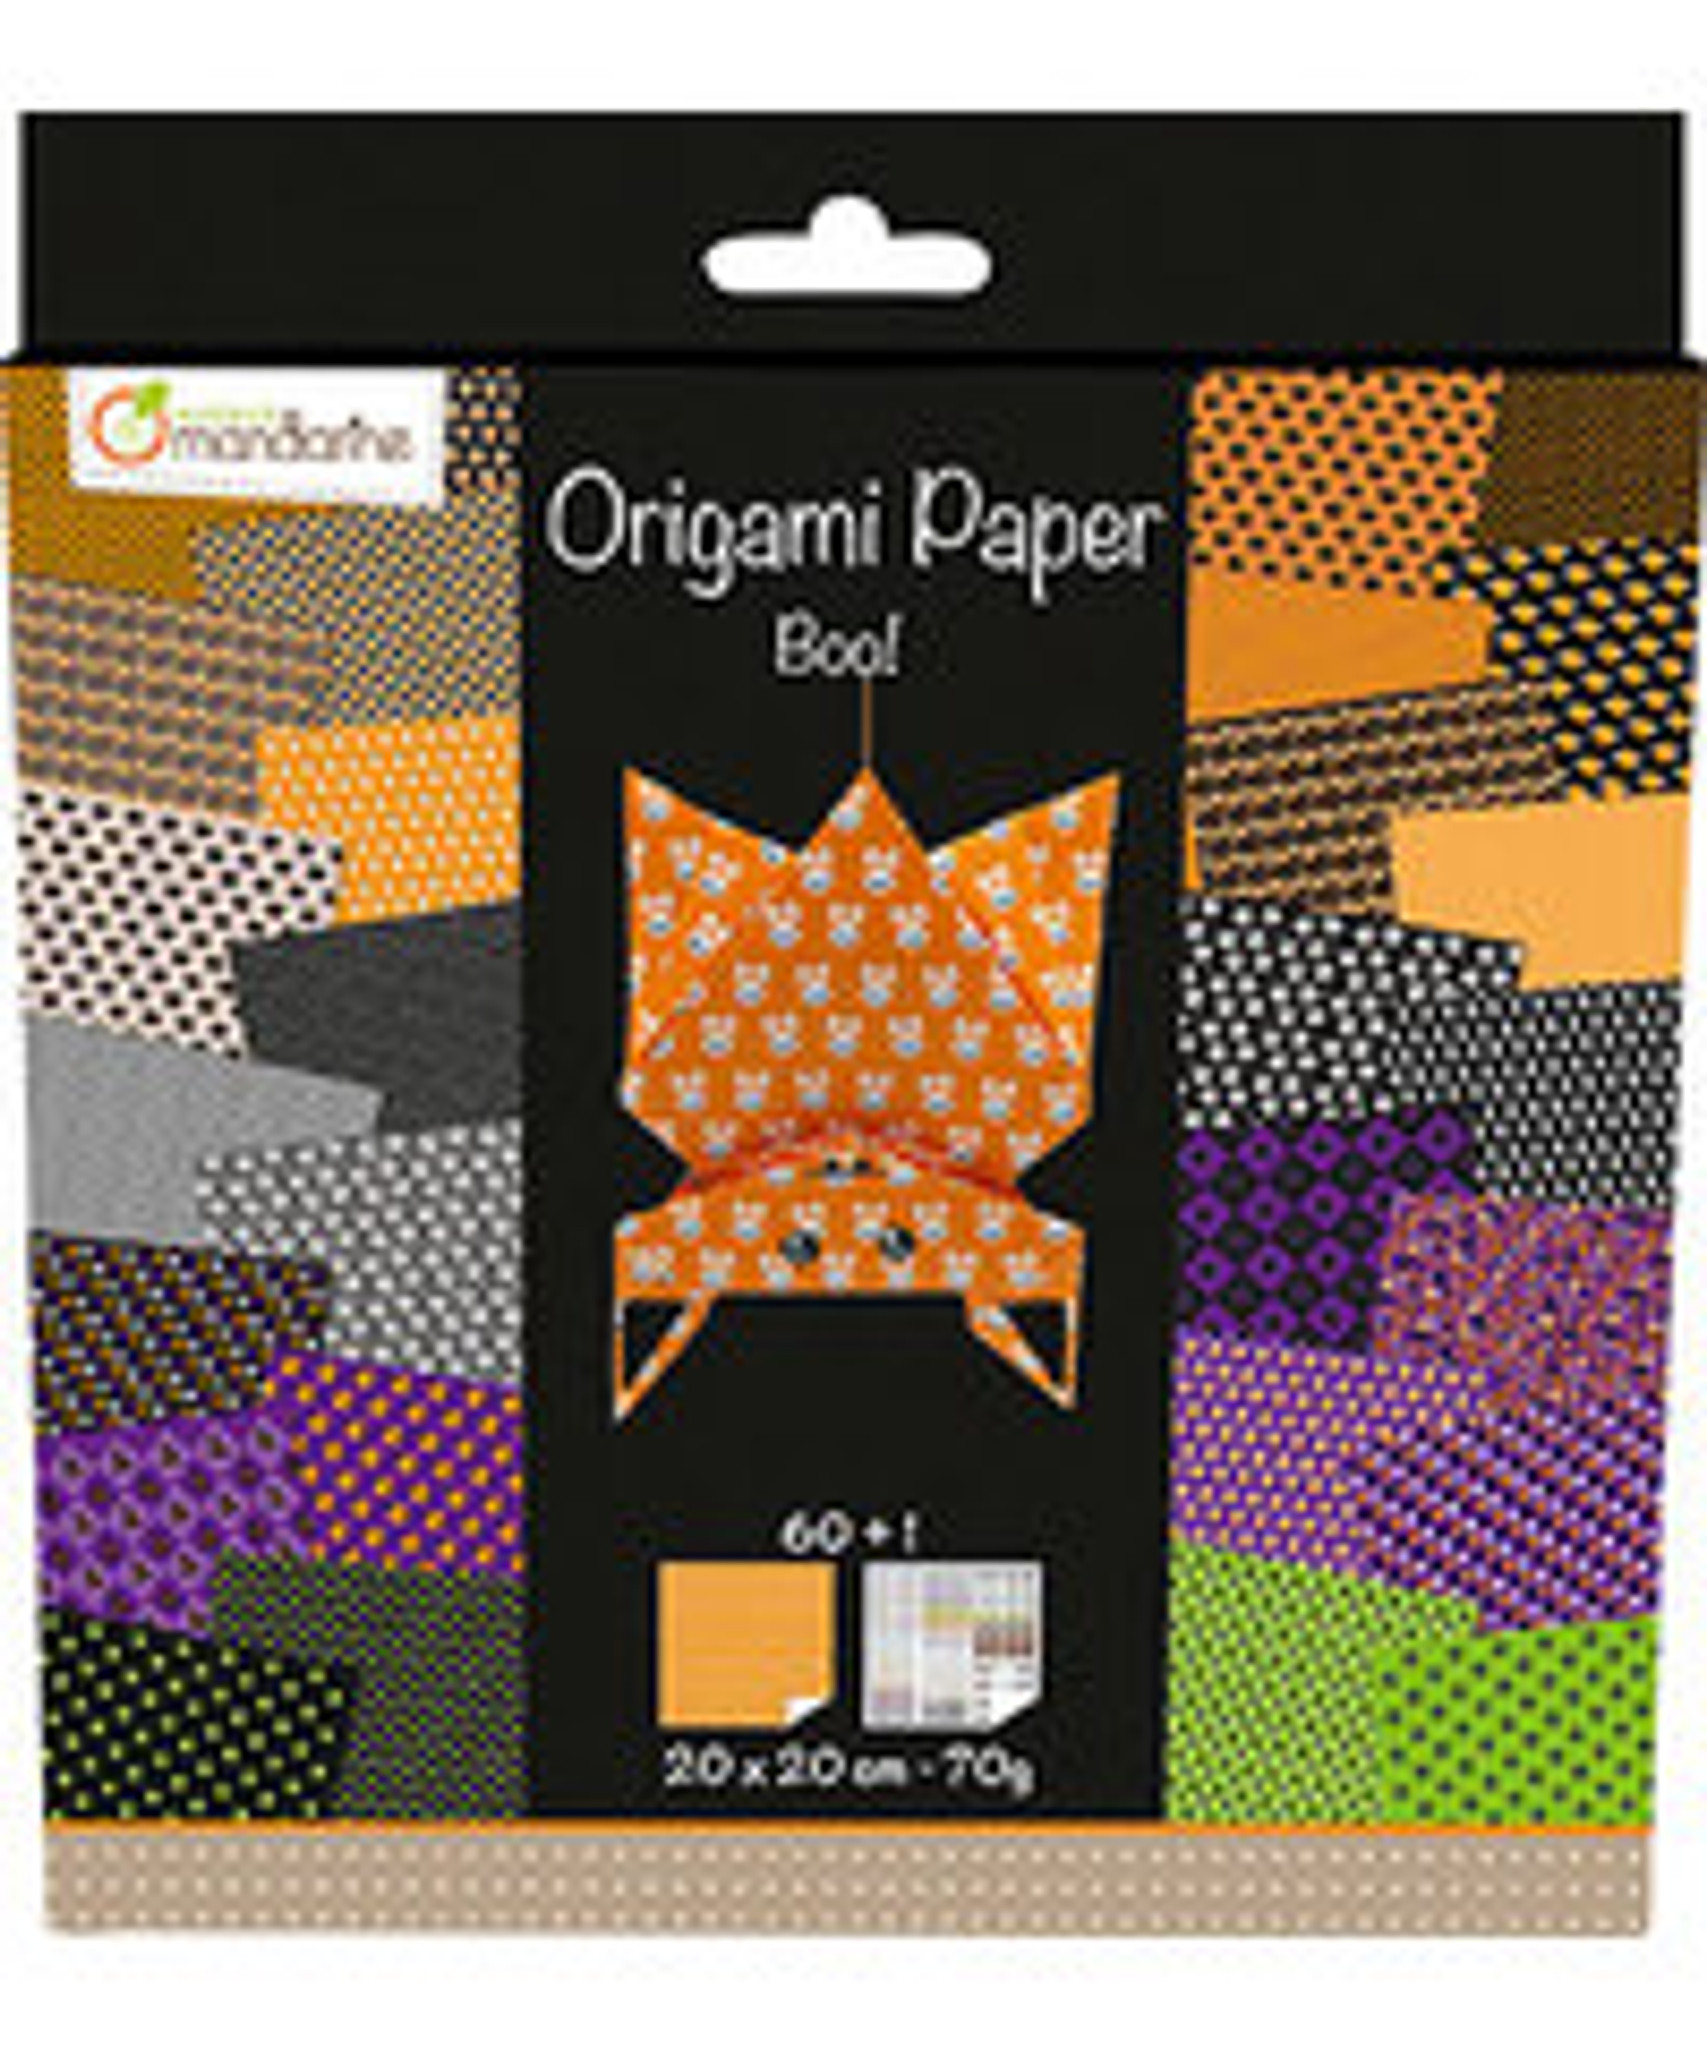 Avenue Mandarine Origami Paper - Love